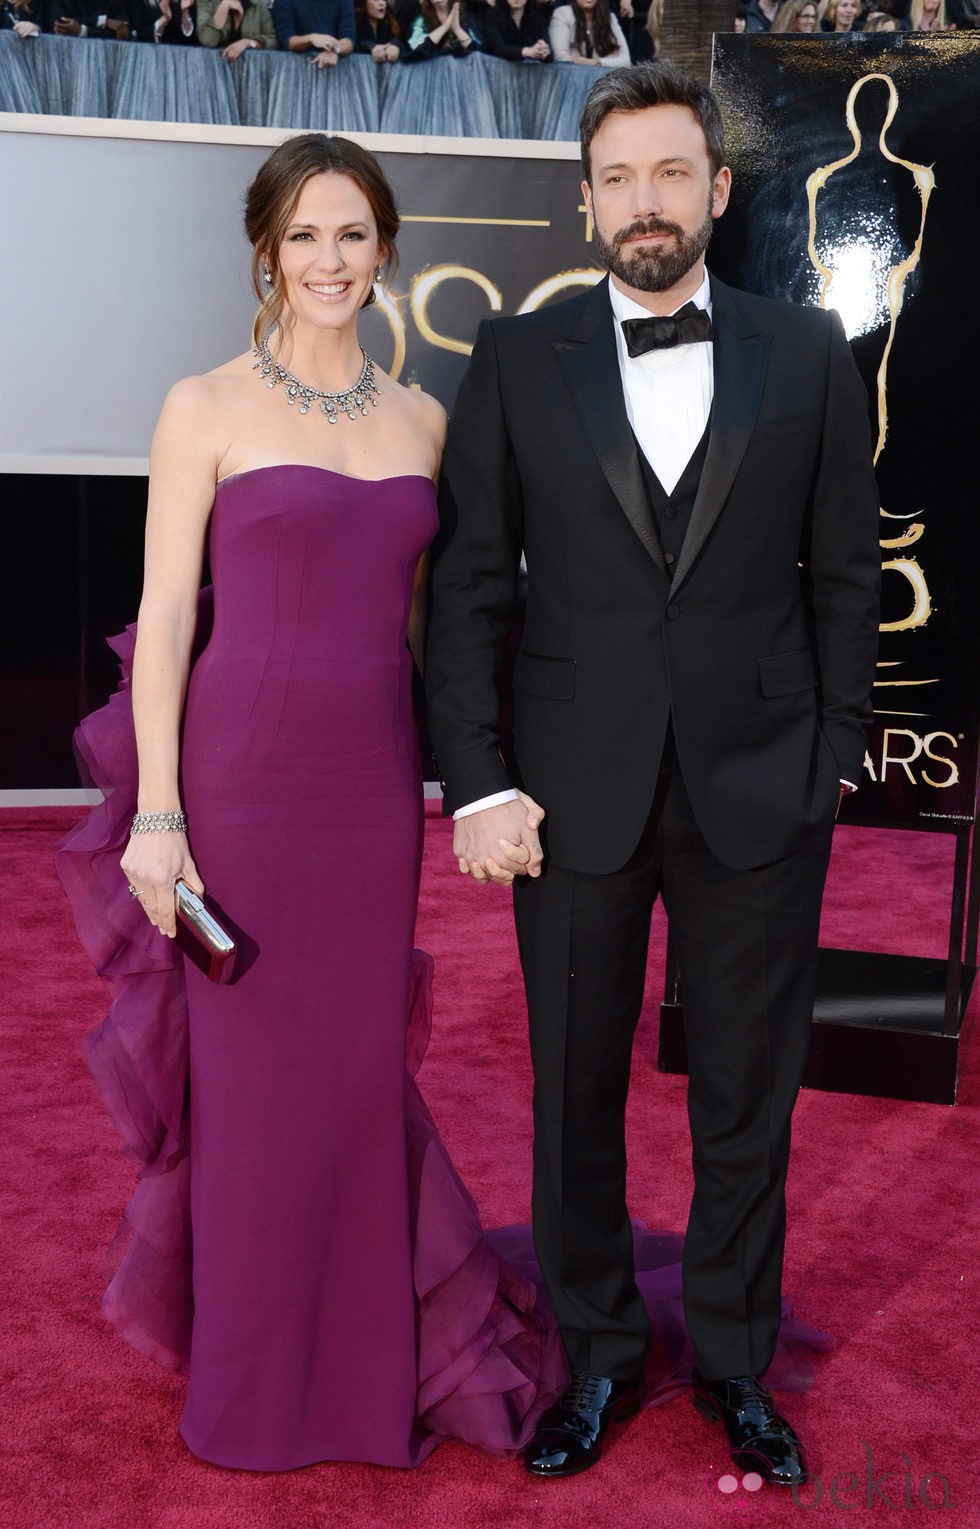 Jennifer Garner y Ben Affleck en los Oscar 2013